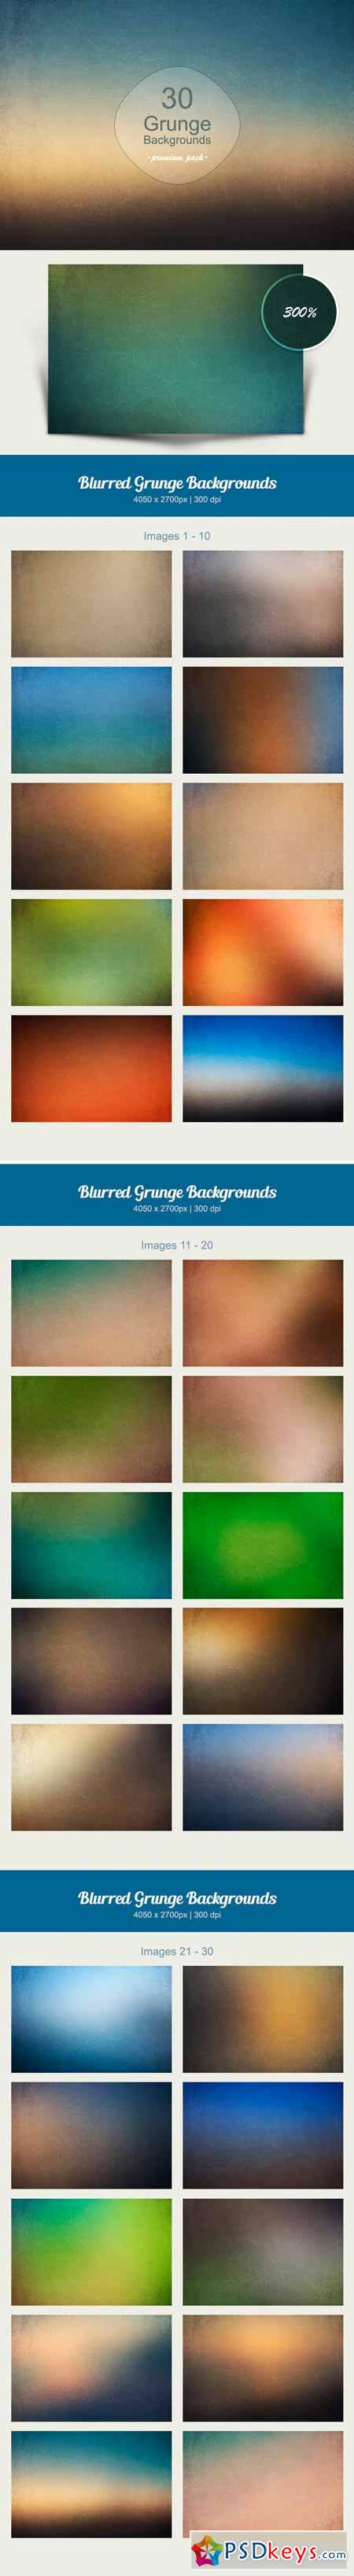 30 Grunge Blurred Backgrounds 219810